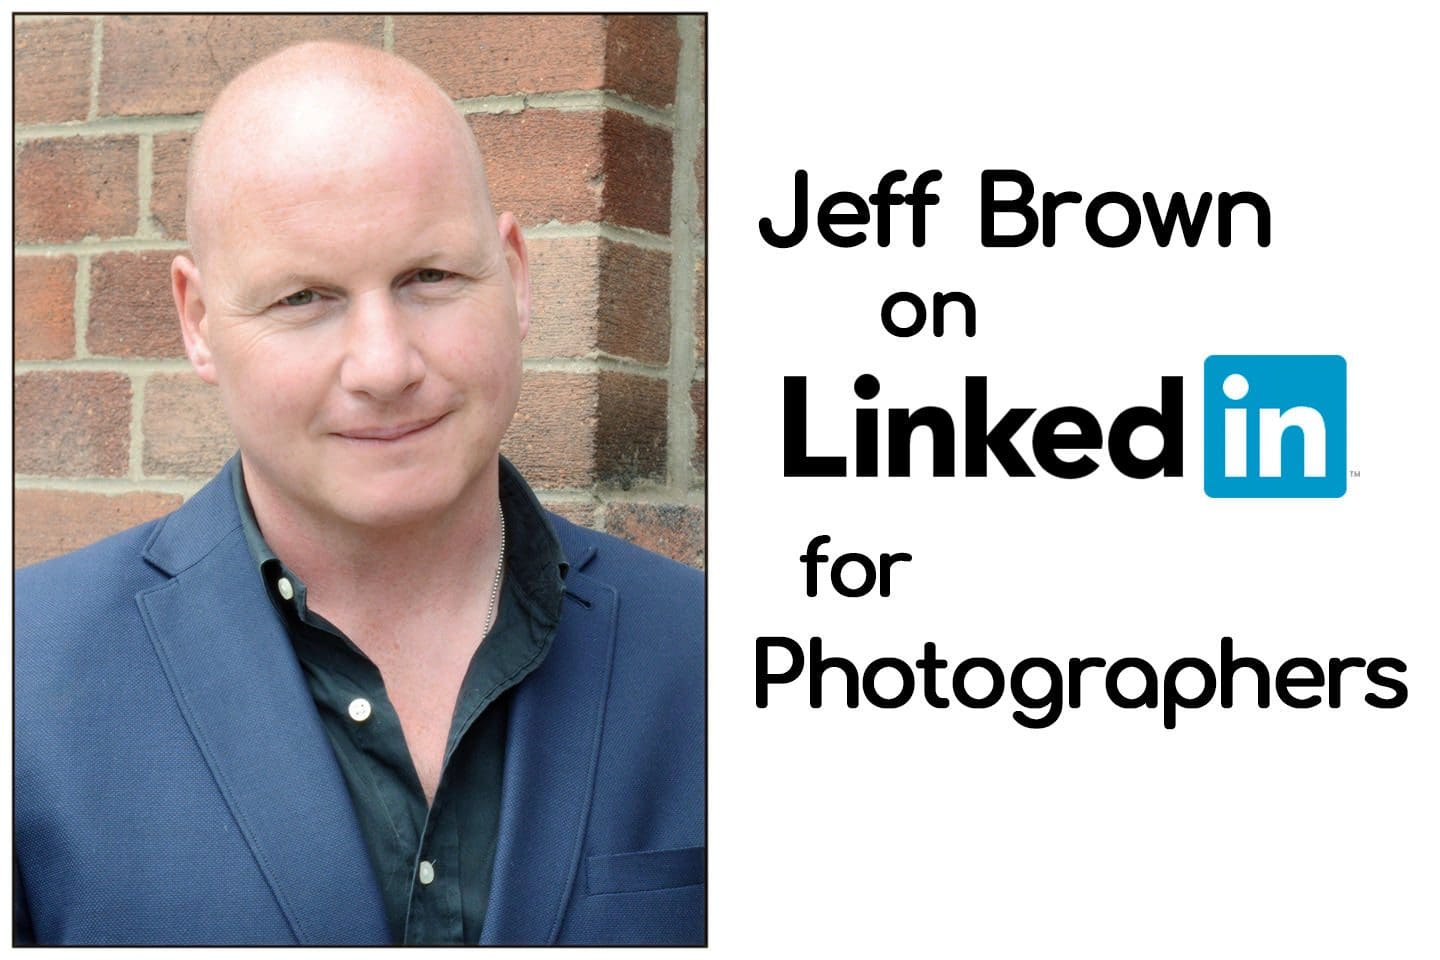 Jeff Brown on LinkedIn for Photographers